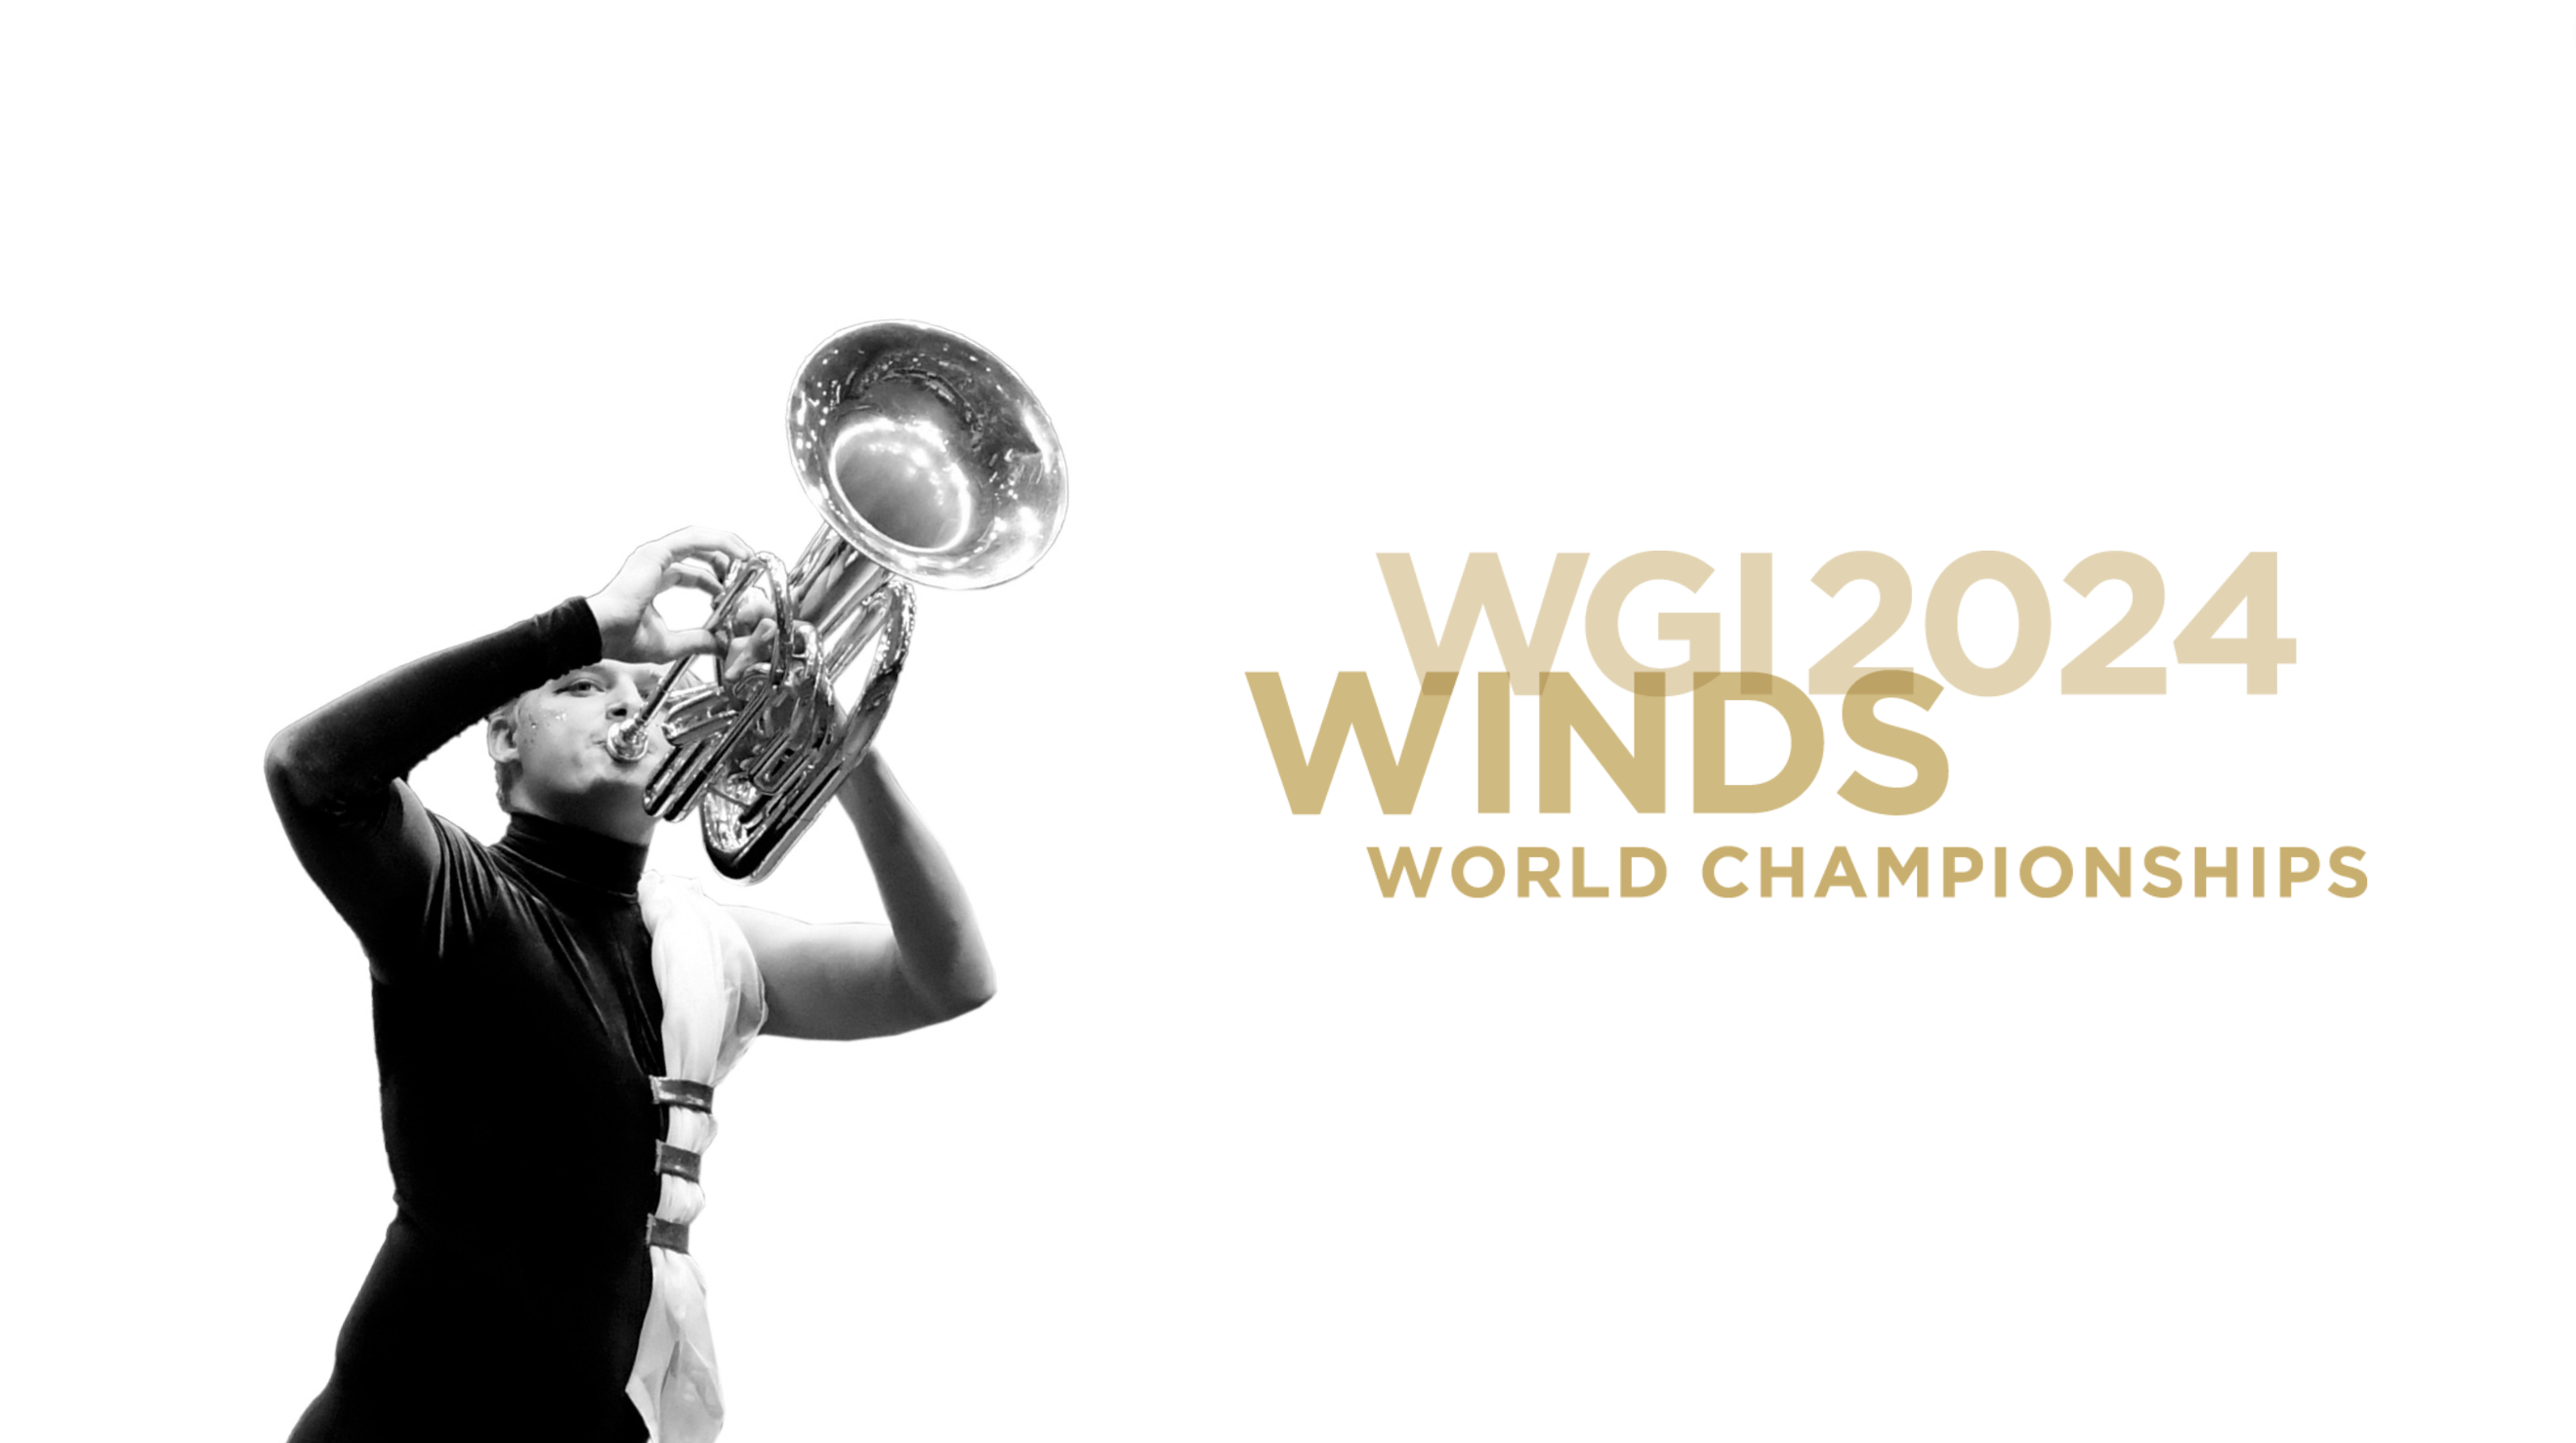 World Championships Winds WGI